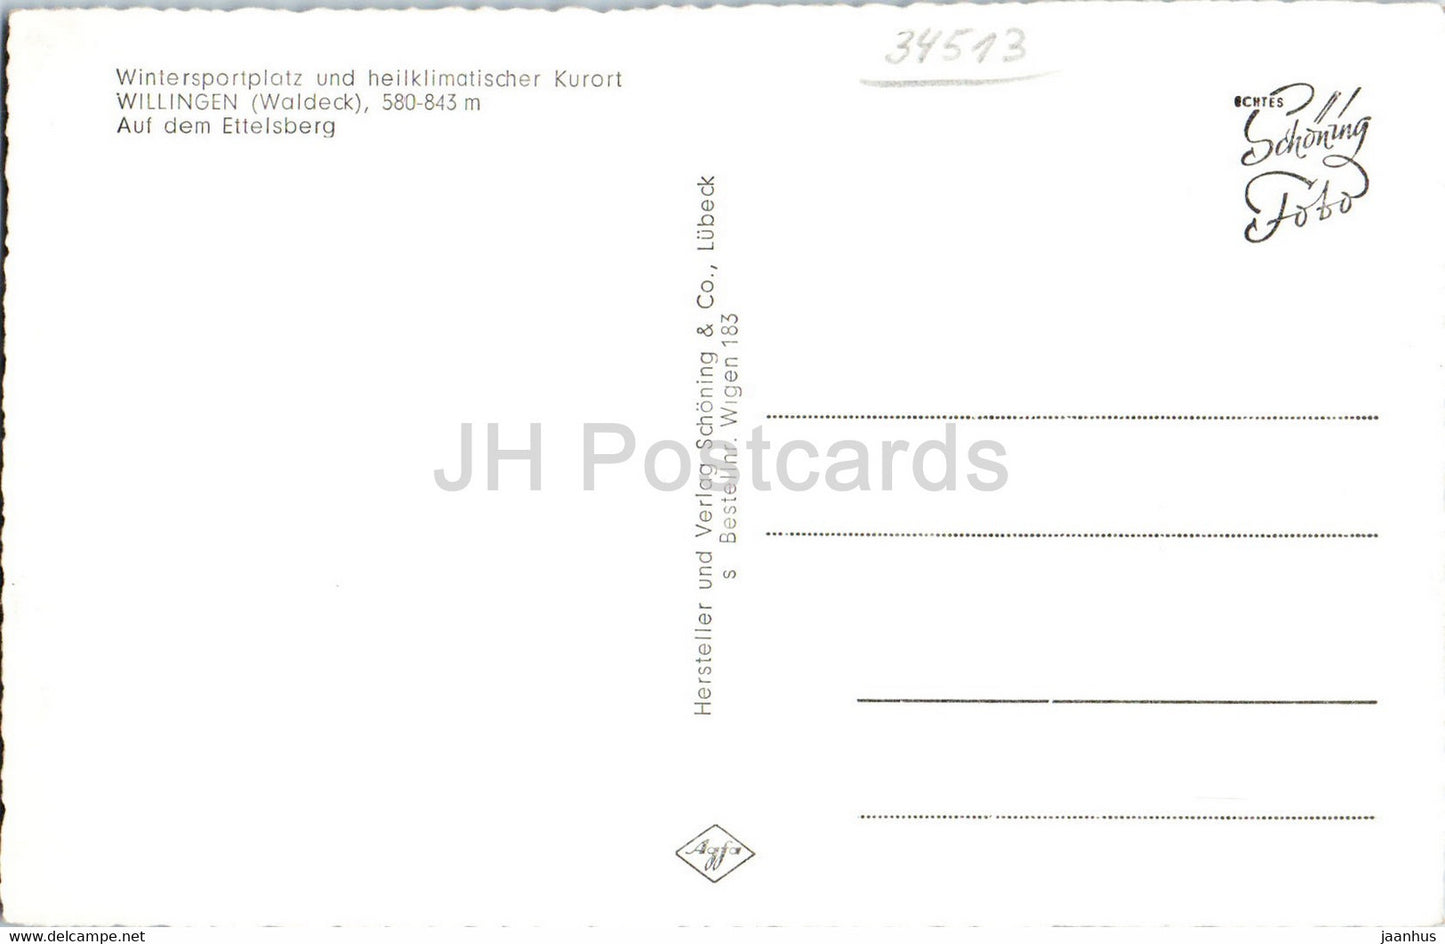 Willingen - Waldeck - Auf dem Ettelsberg - sport de ski - carte postale ancienne - Allemagne - inutilisé